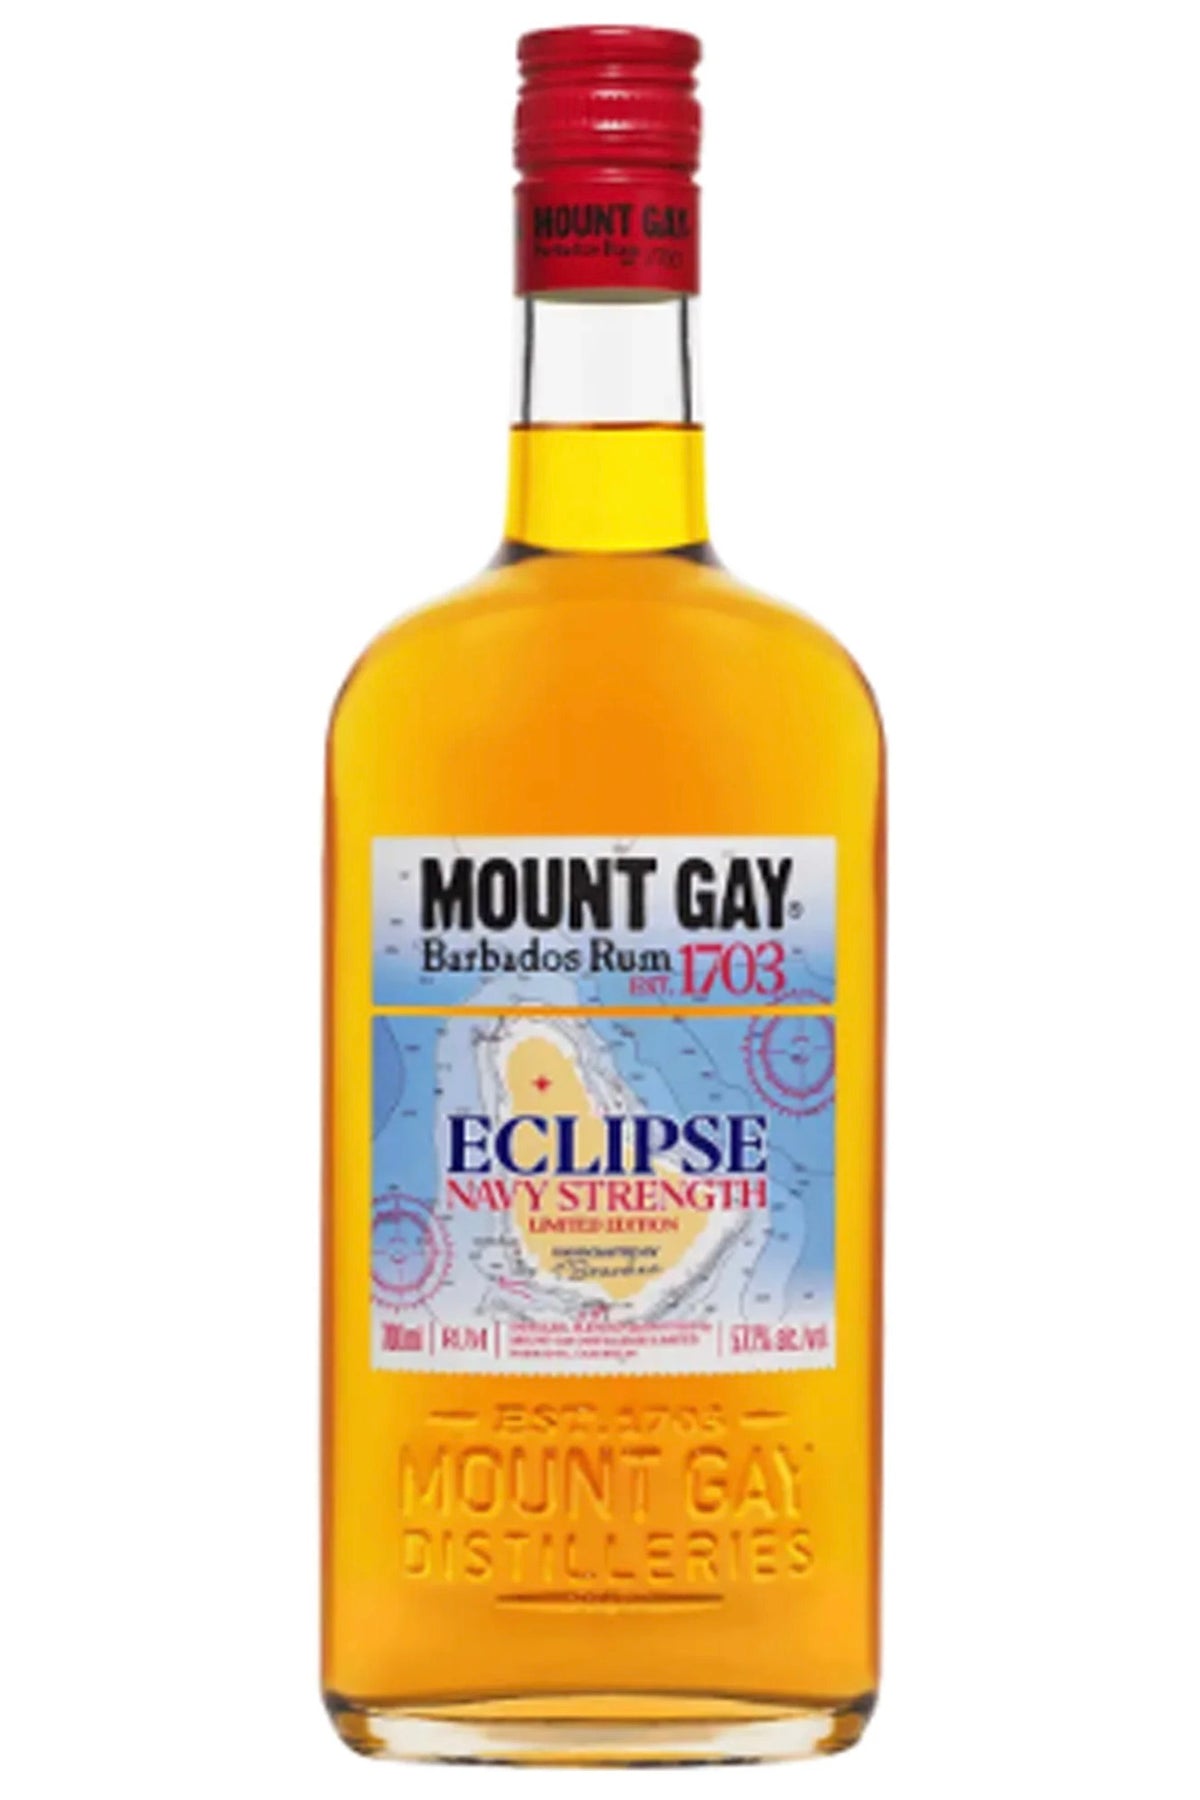 Mount Gay Eclipse Gold Navy Strength Rum